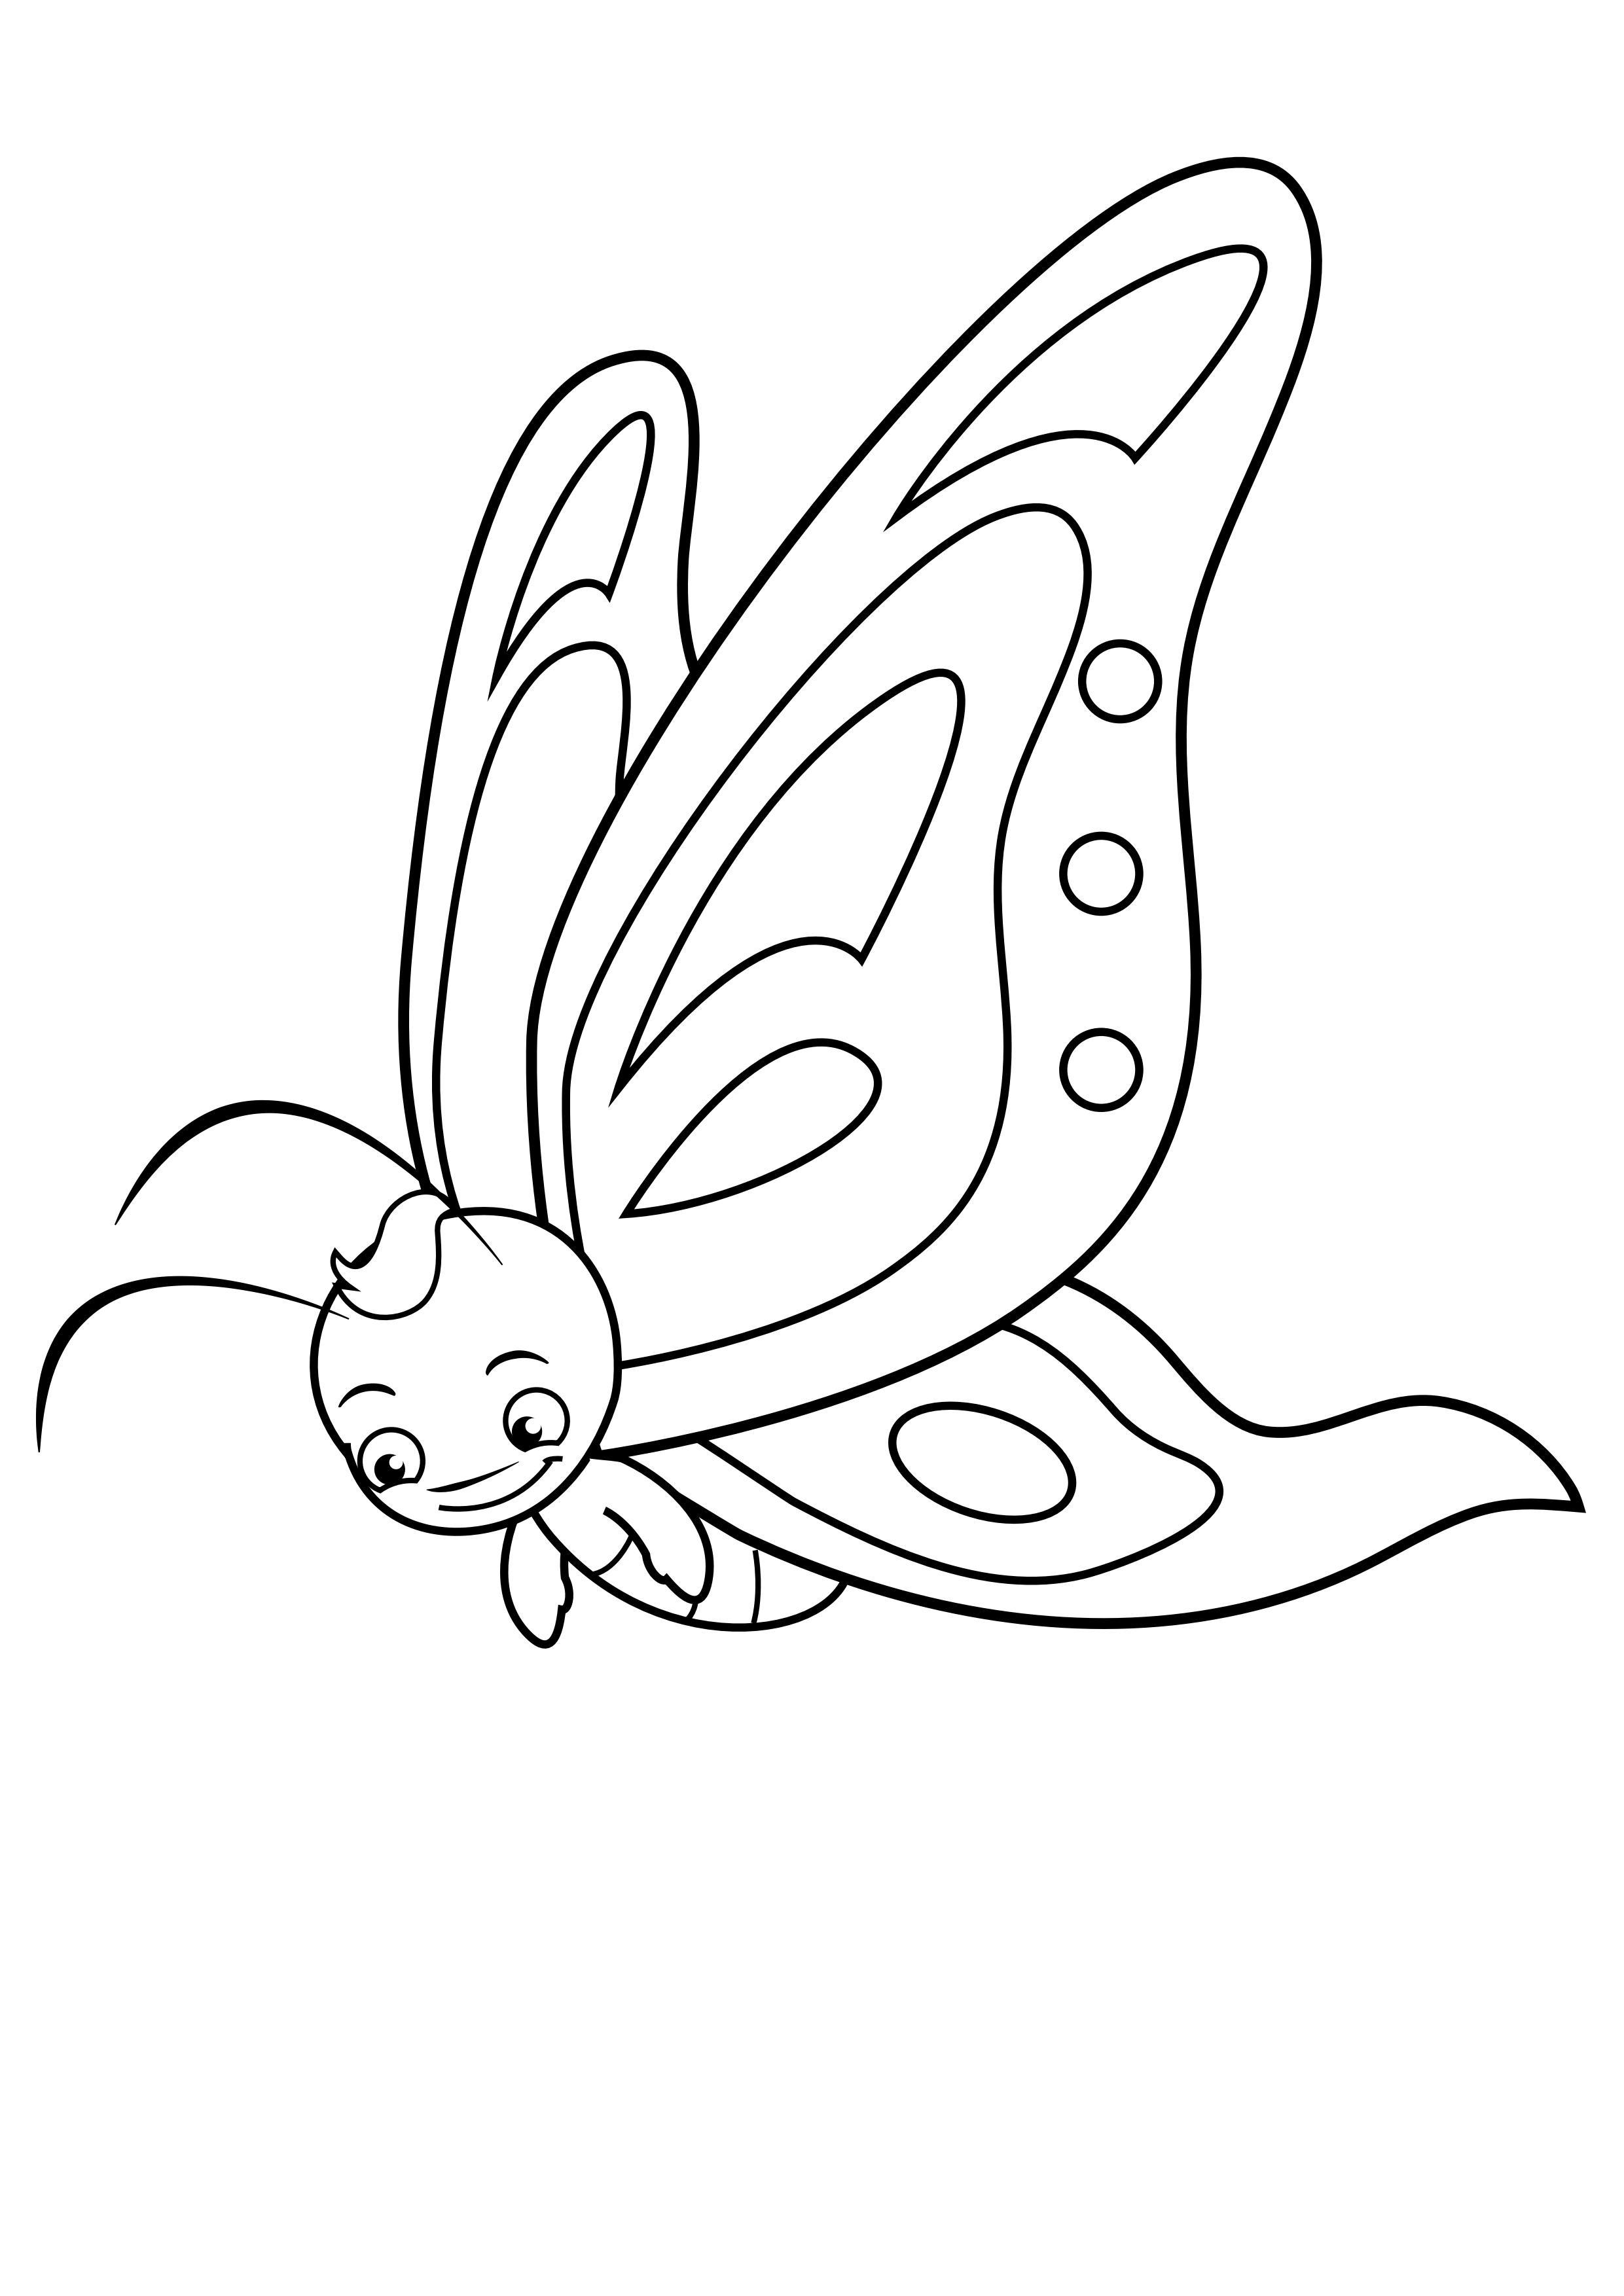 Desenho online para colorir: borboleta